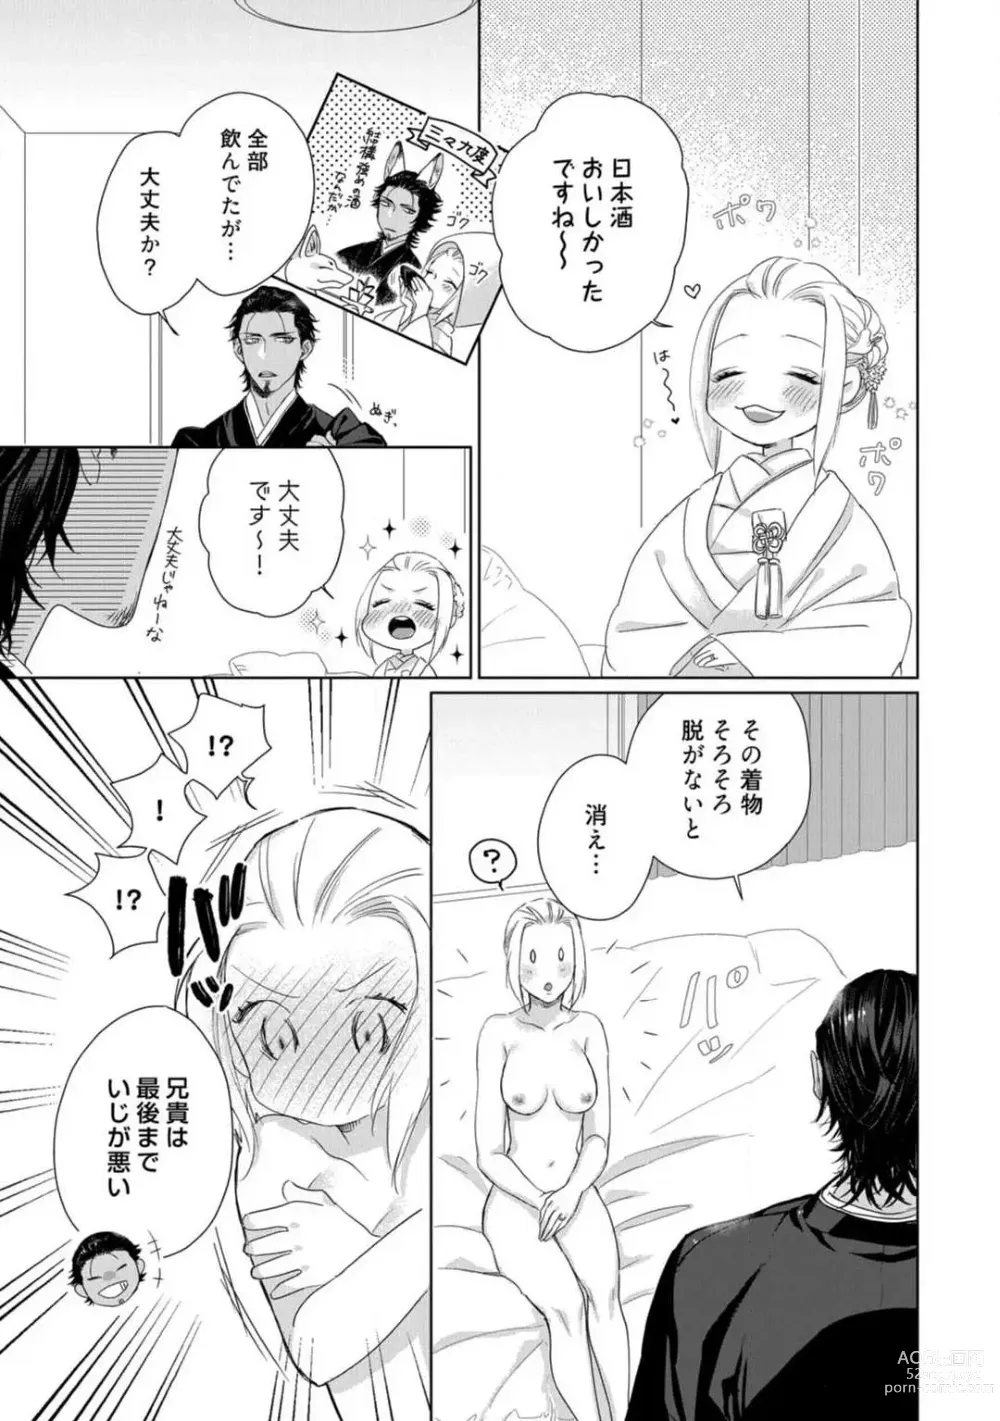 Page 327 of manga Kamidanomi Konkatsu 1-12